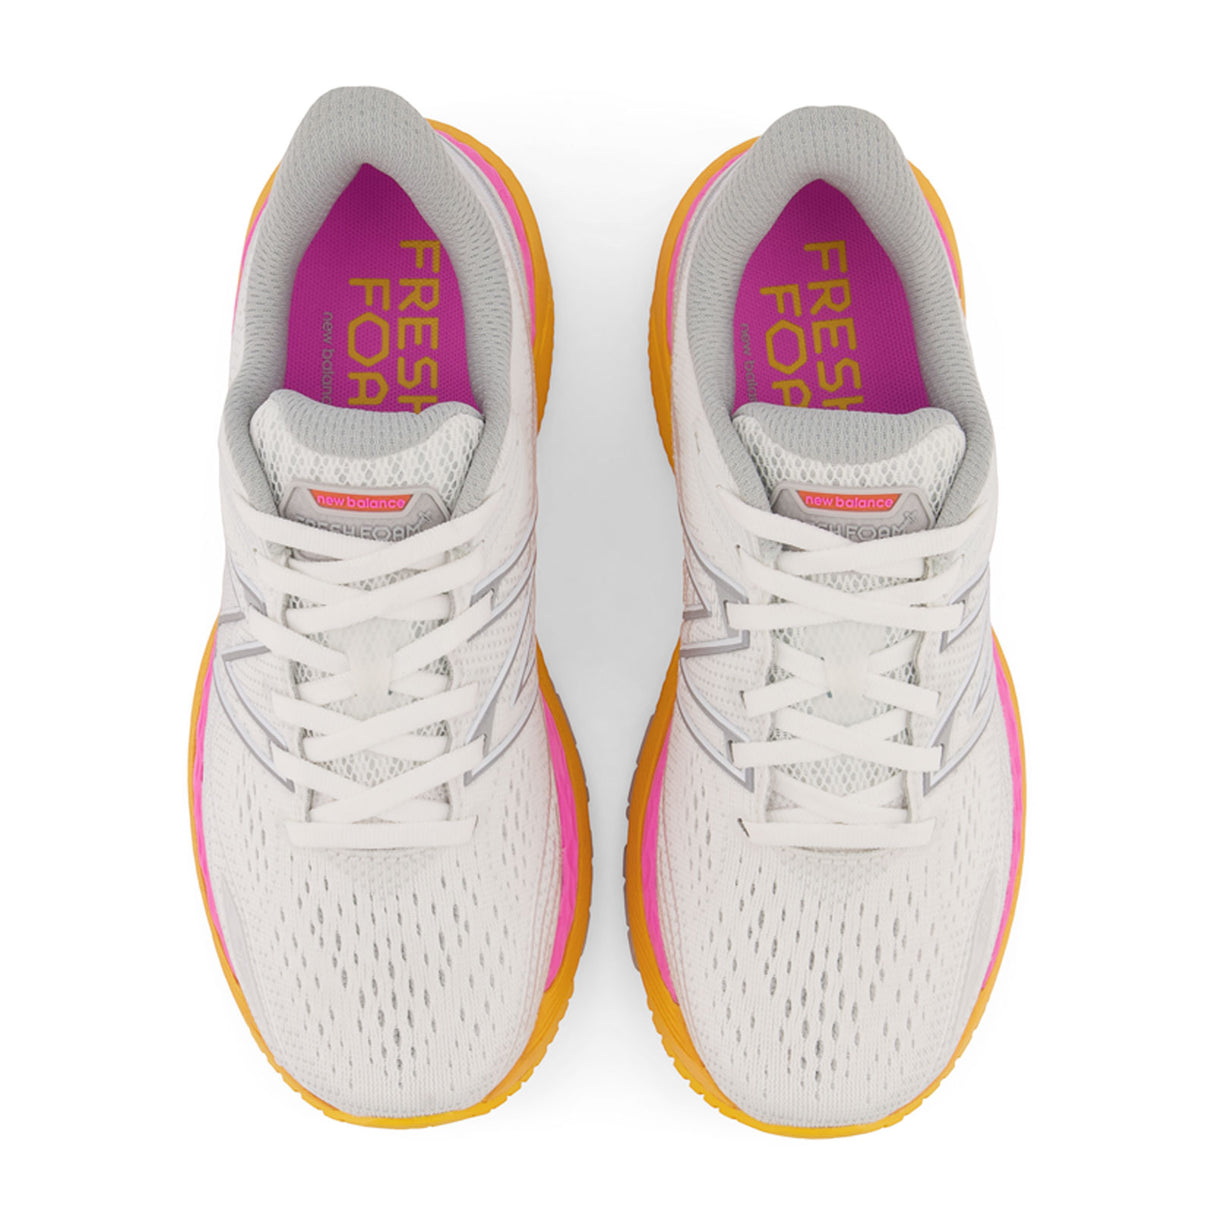 New Balance Fresh Foam X 860 v12 Running Shoe (Women) - White/Vibrant Orange/Vibrant Pink Athletic - Running - The Heel Shoe Fitters